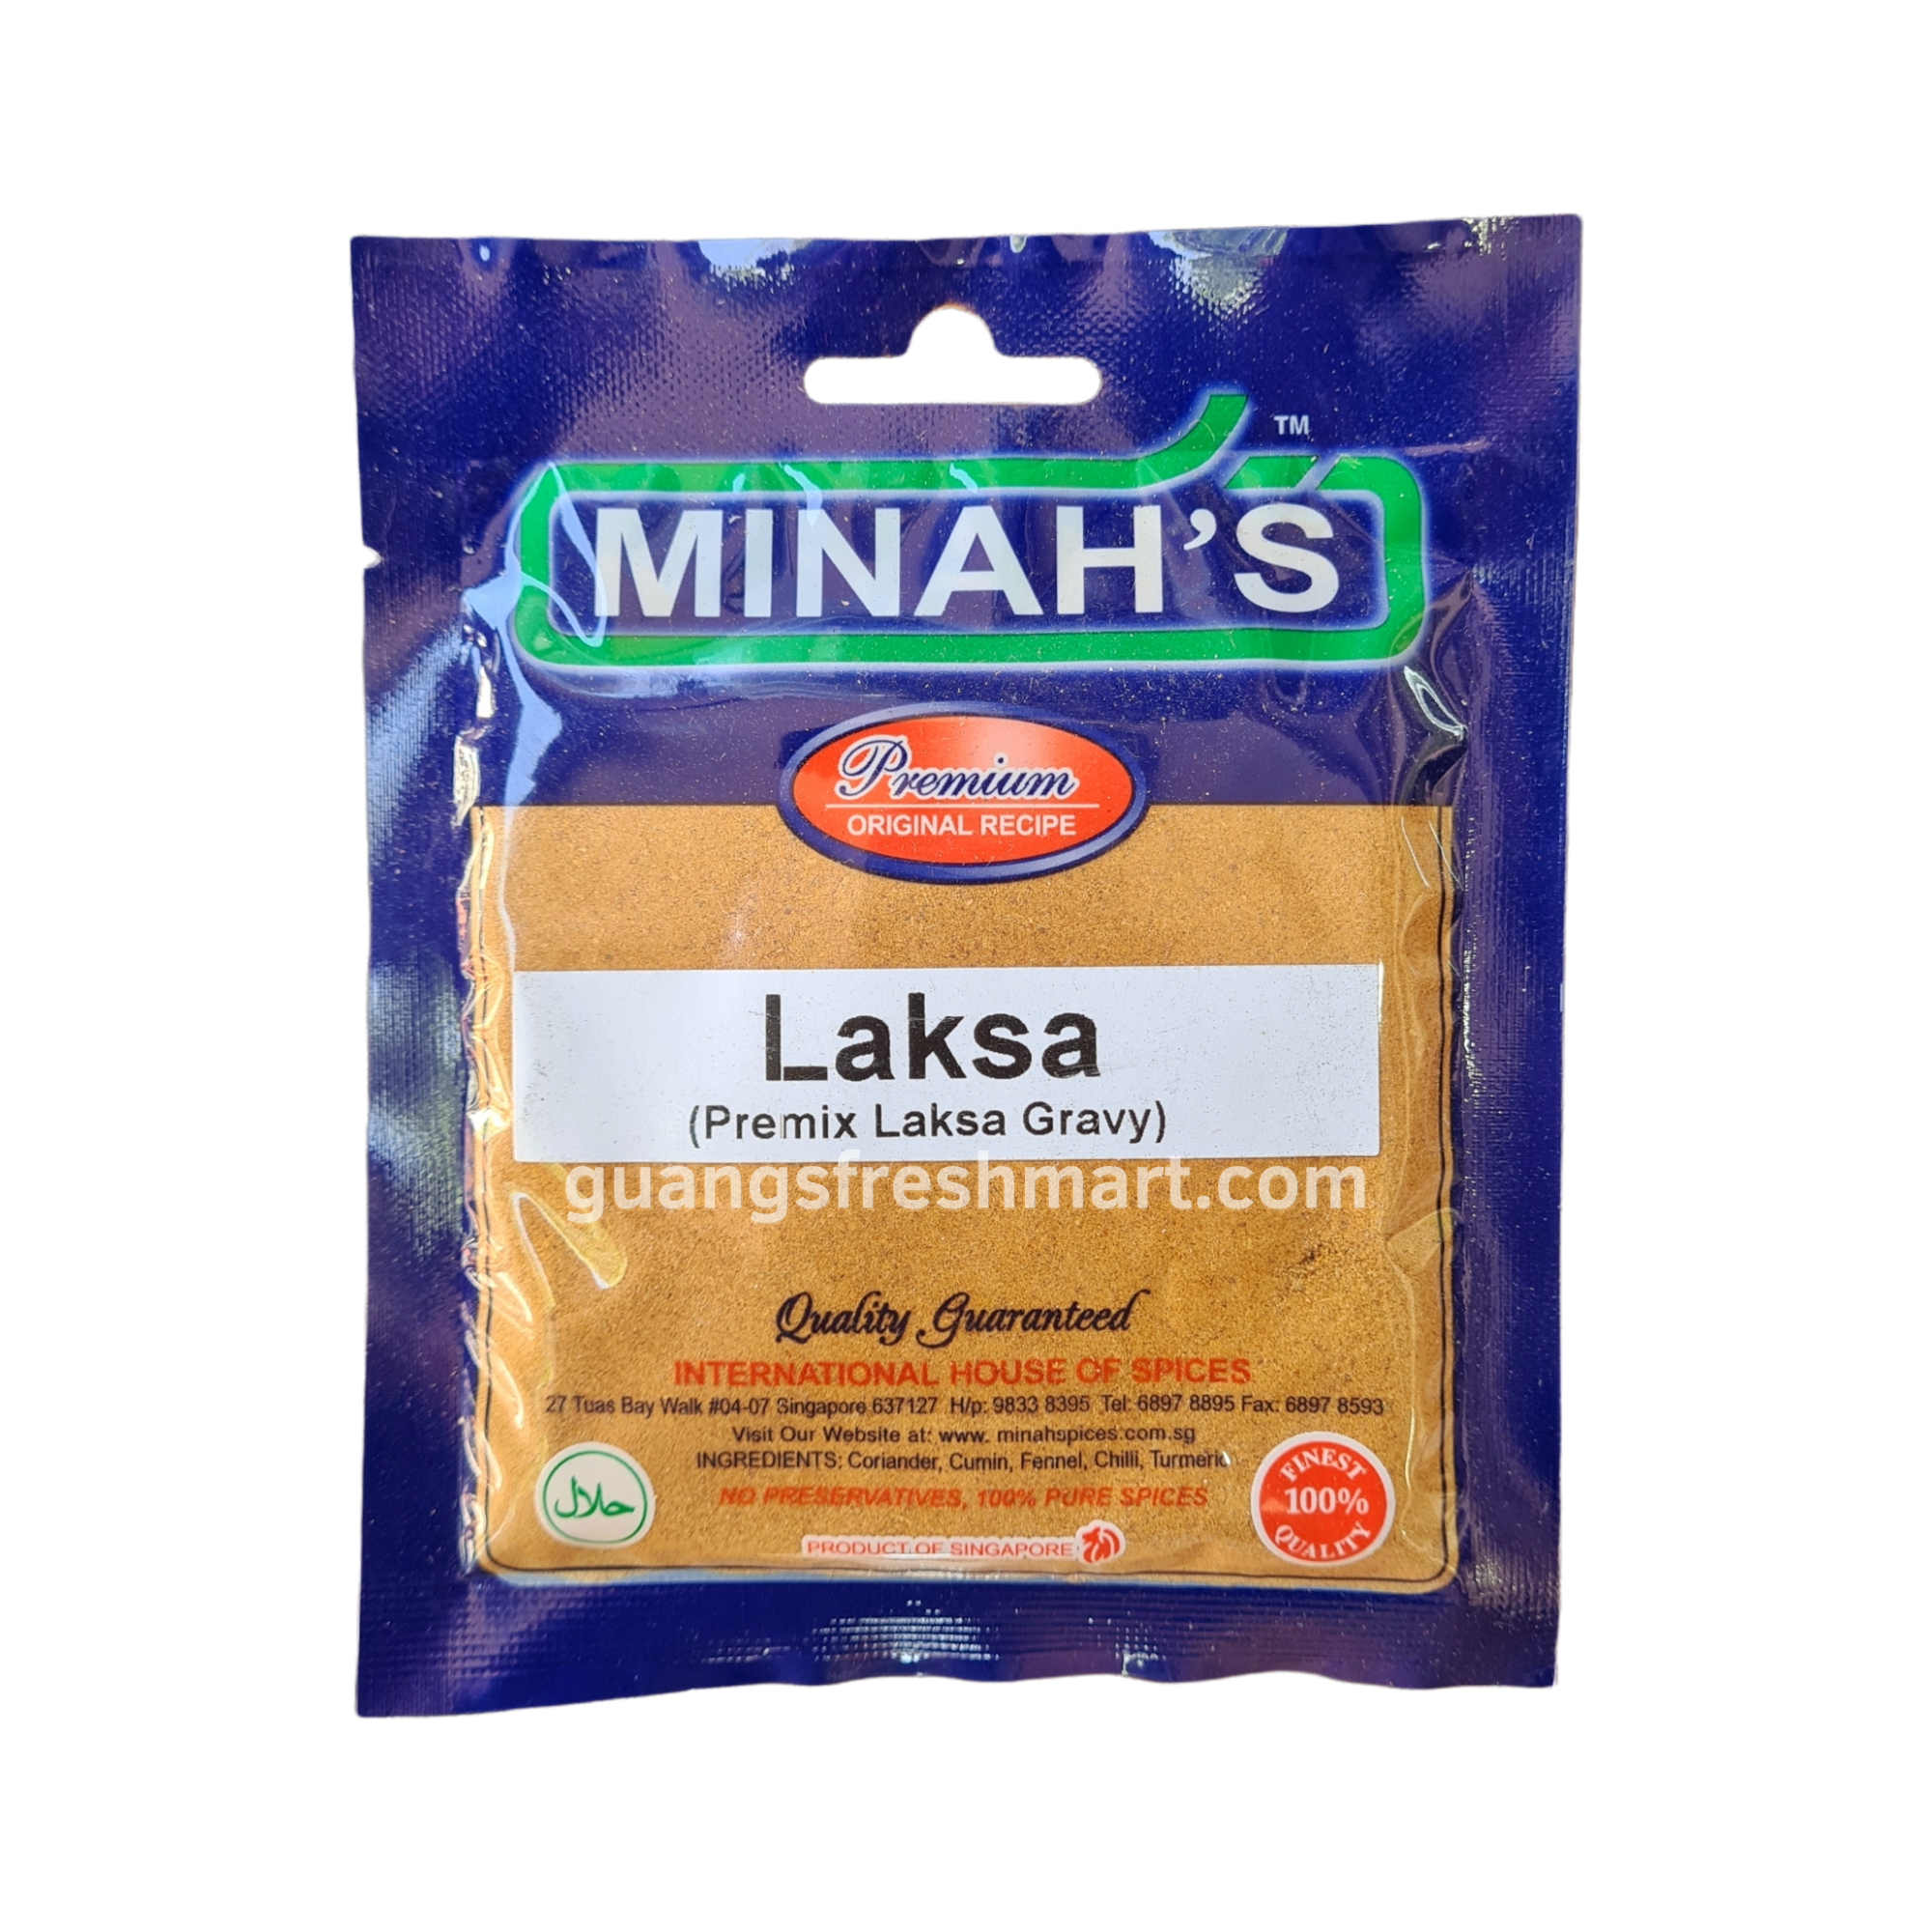 Minah's Laksa (Premix Laksa Gravy)